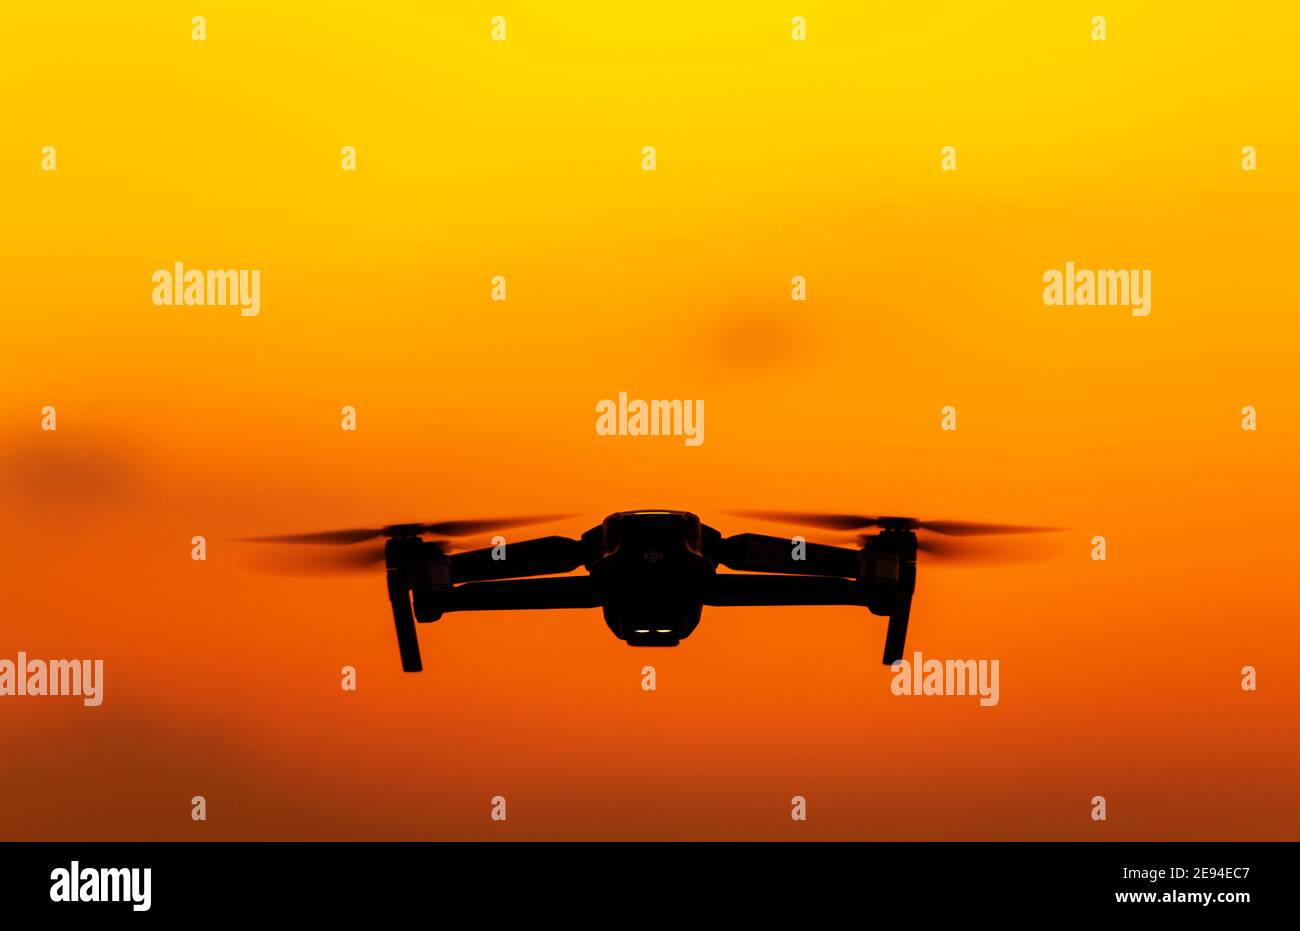 Unbemannte Flugzeugtechnologien. Moderne Medium Weight Drohne am Himmel während szenischen Sonnenuntergang. Oberer Kopierbereich. Stockfoto